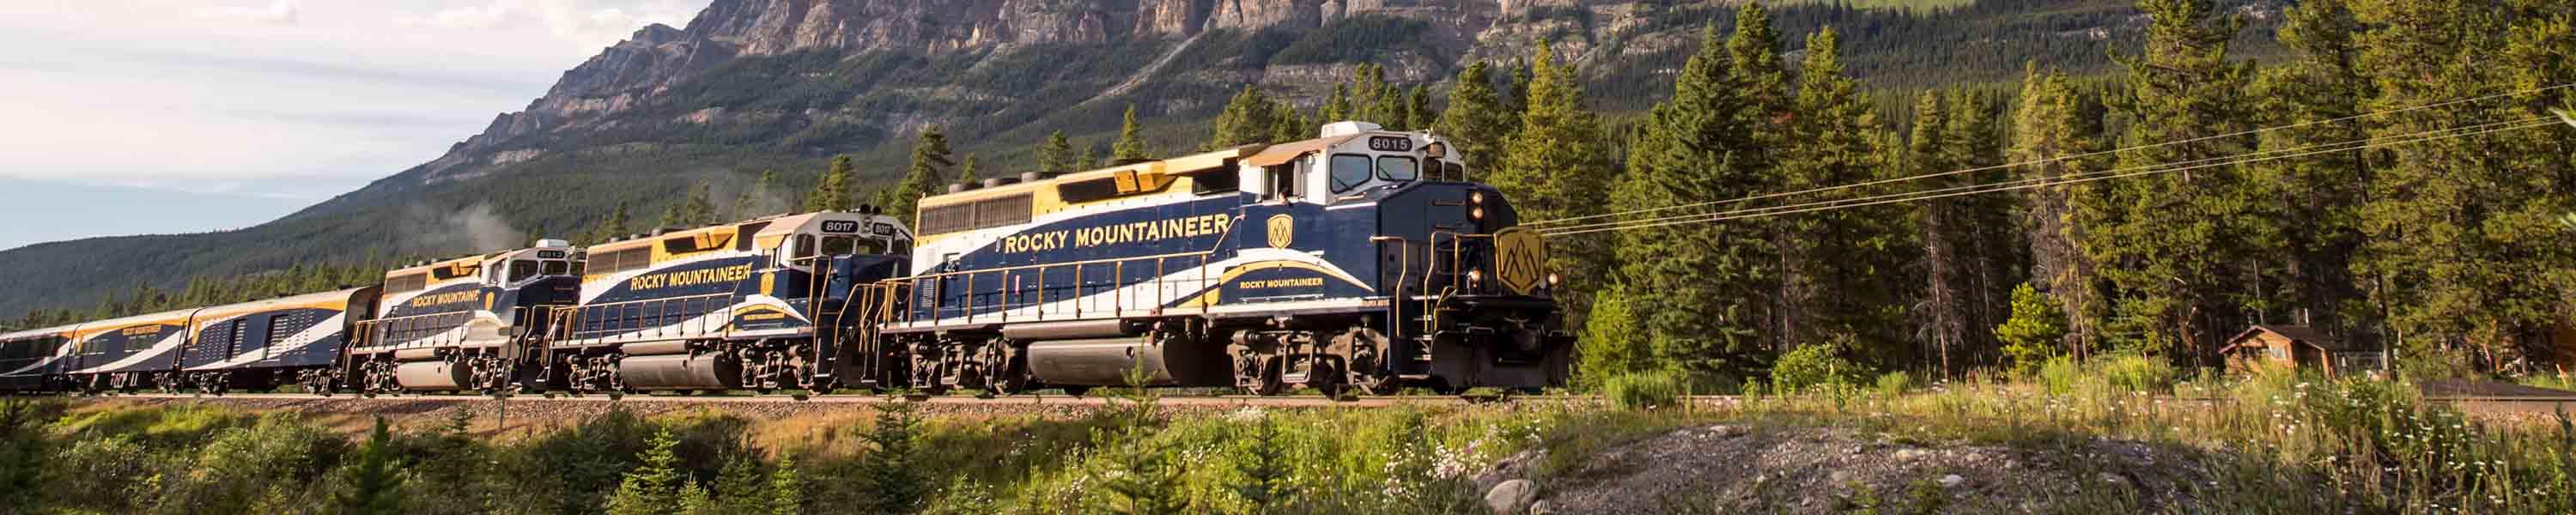 rocky mountaineer train